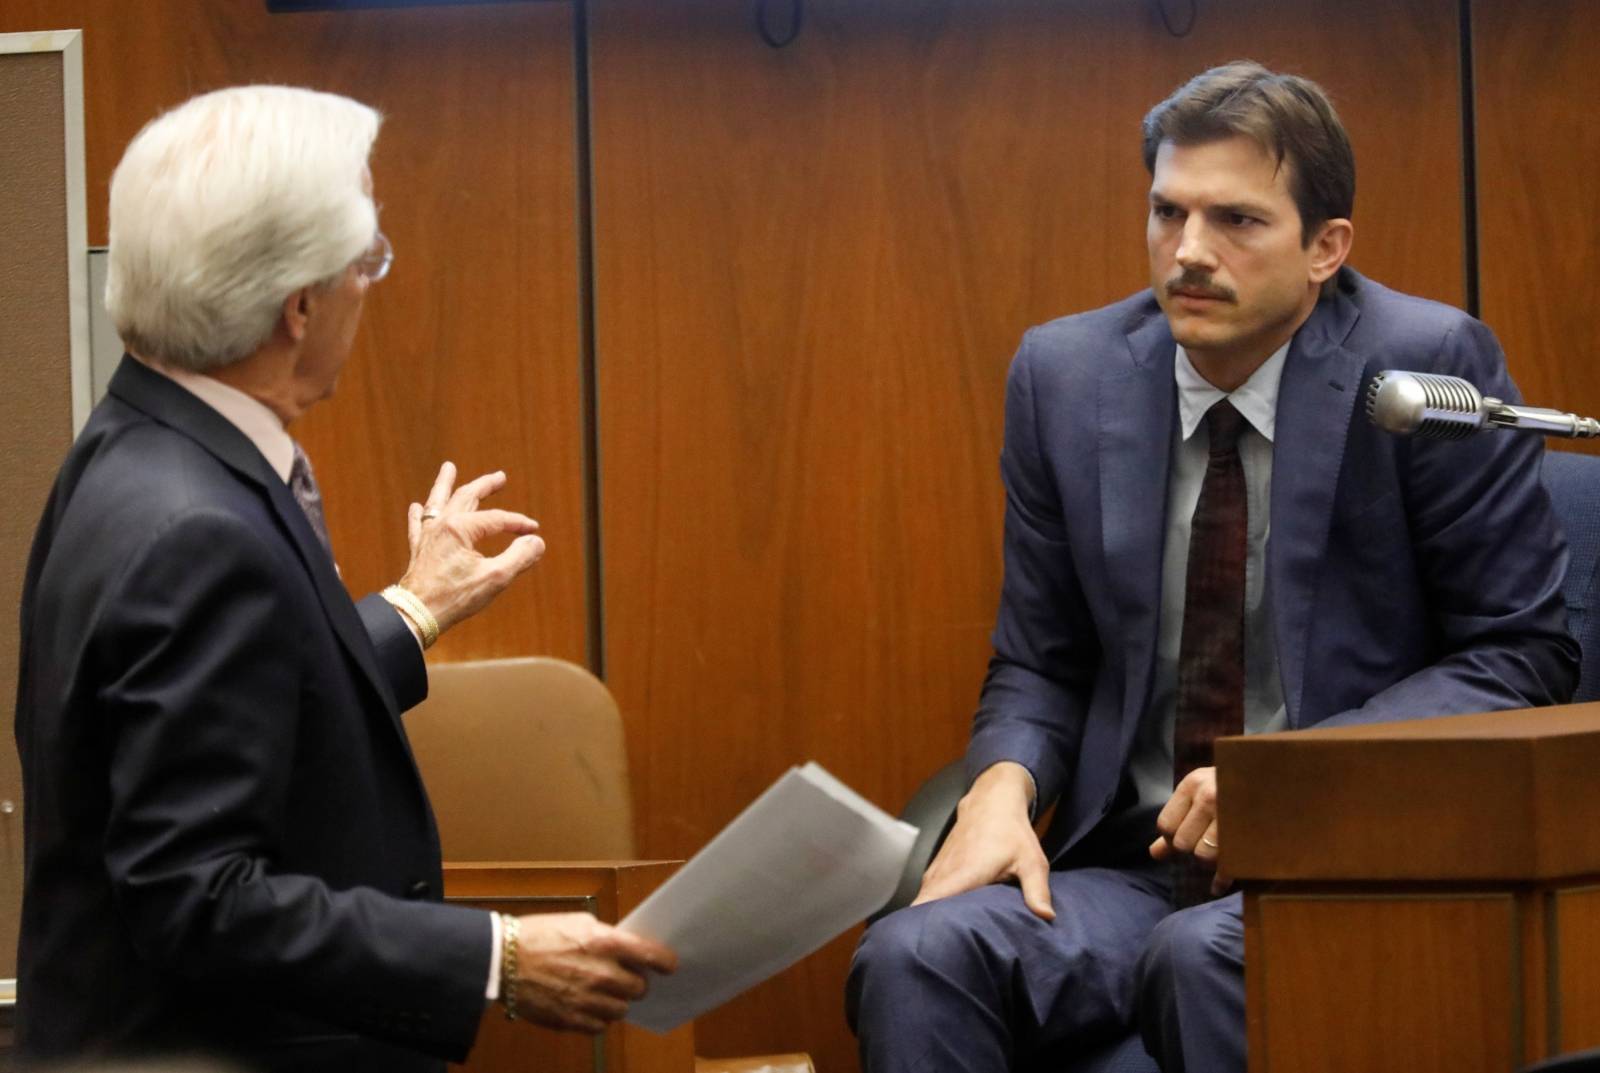 Daniel Nardoni, defence attorney, questions actor Ashton Kutcher at the murder trial of accused serial killer Michael Thomas Gargiulo in Los Angeles